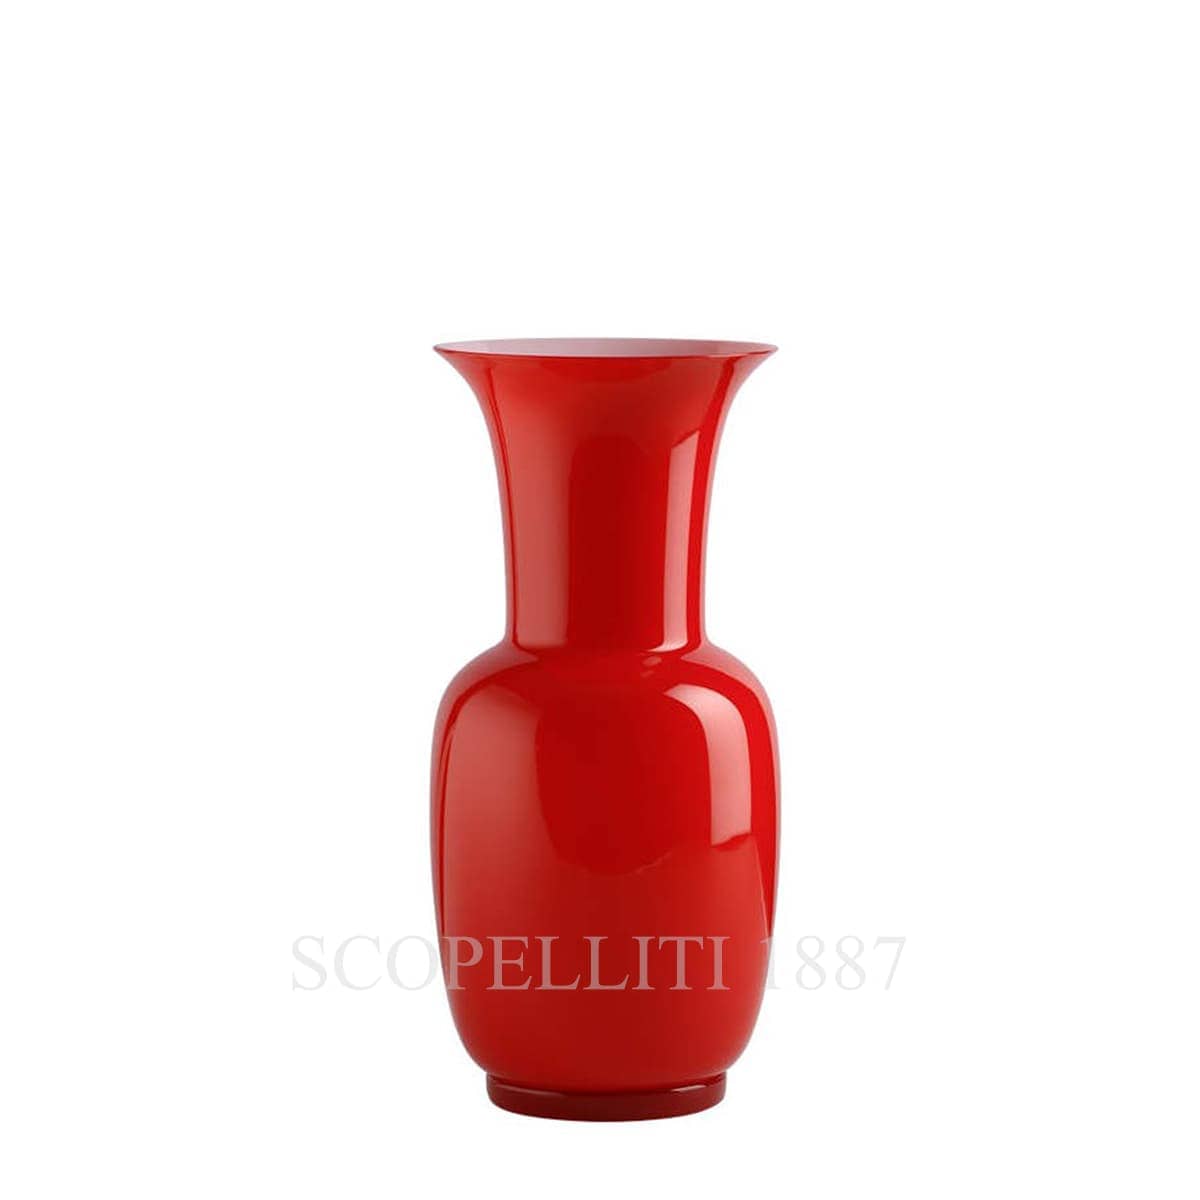 Vase Small Red 706.38 - SCOPELLITI